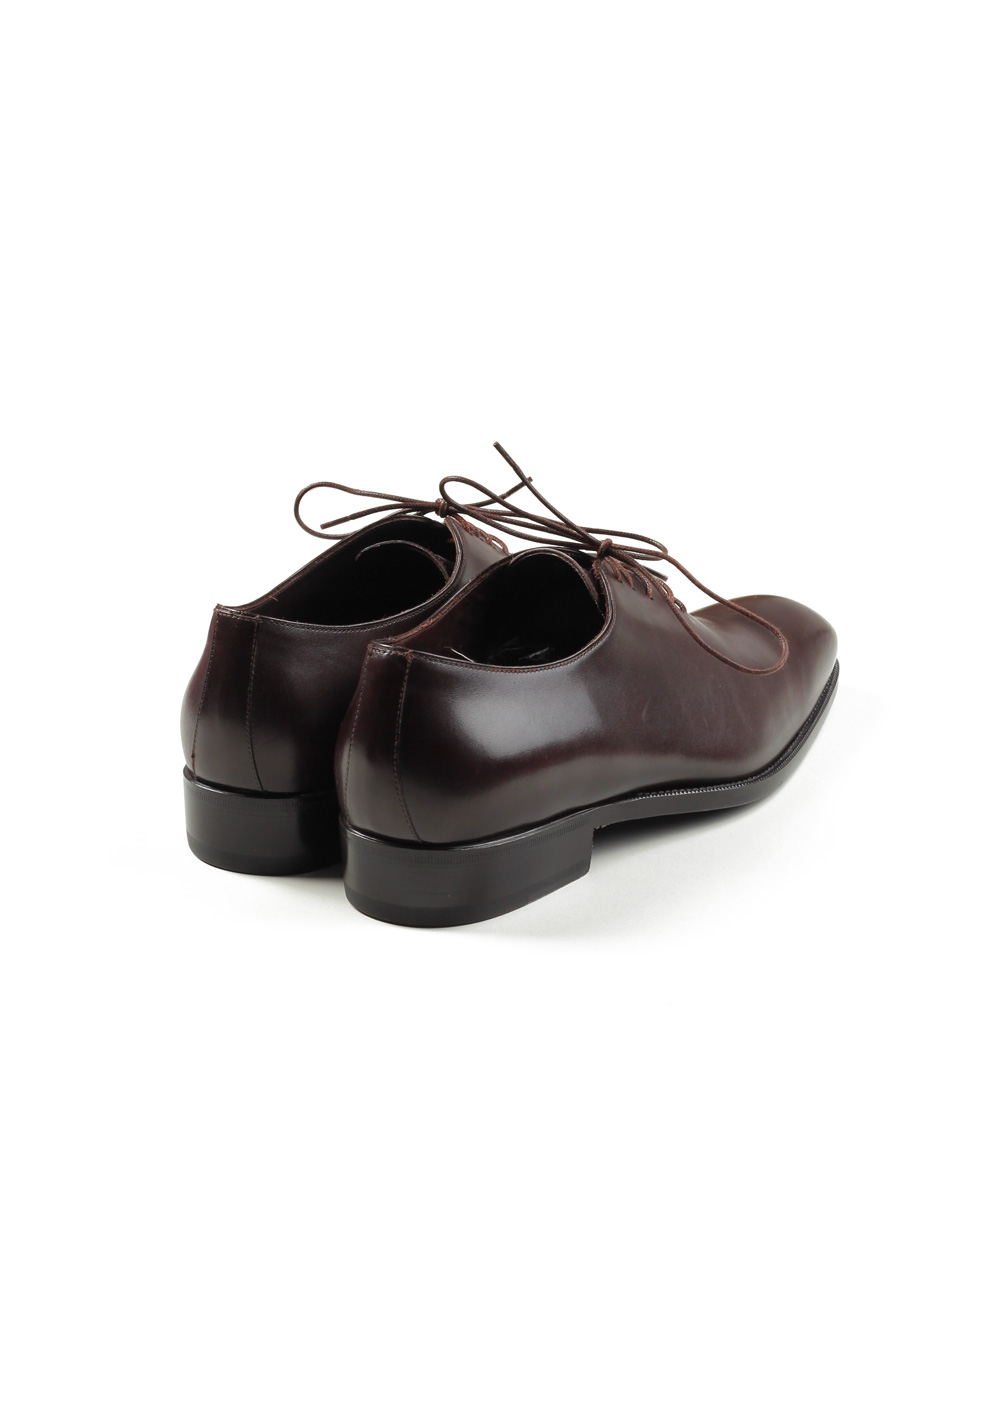 TOM FORD Gianni Whole-cut Oxford Shoes Size 8.5T Uk / 9.5T U.S. | Costume Limité